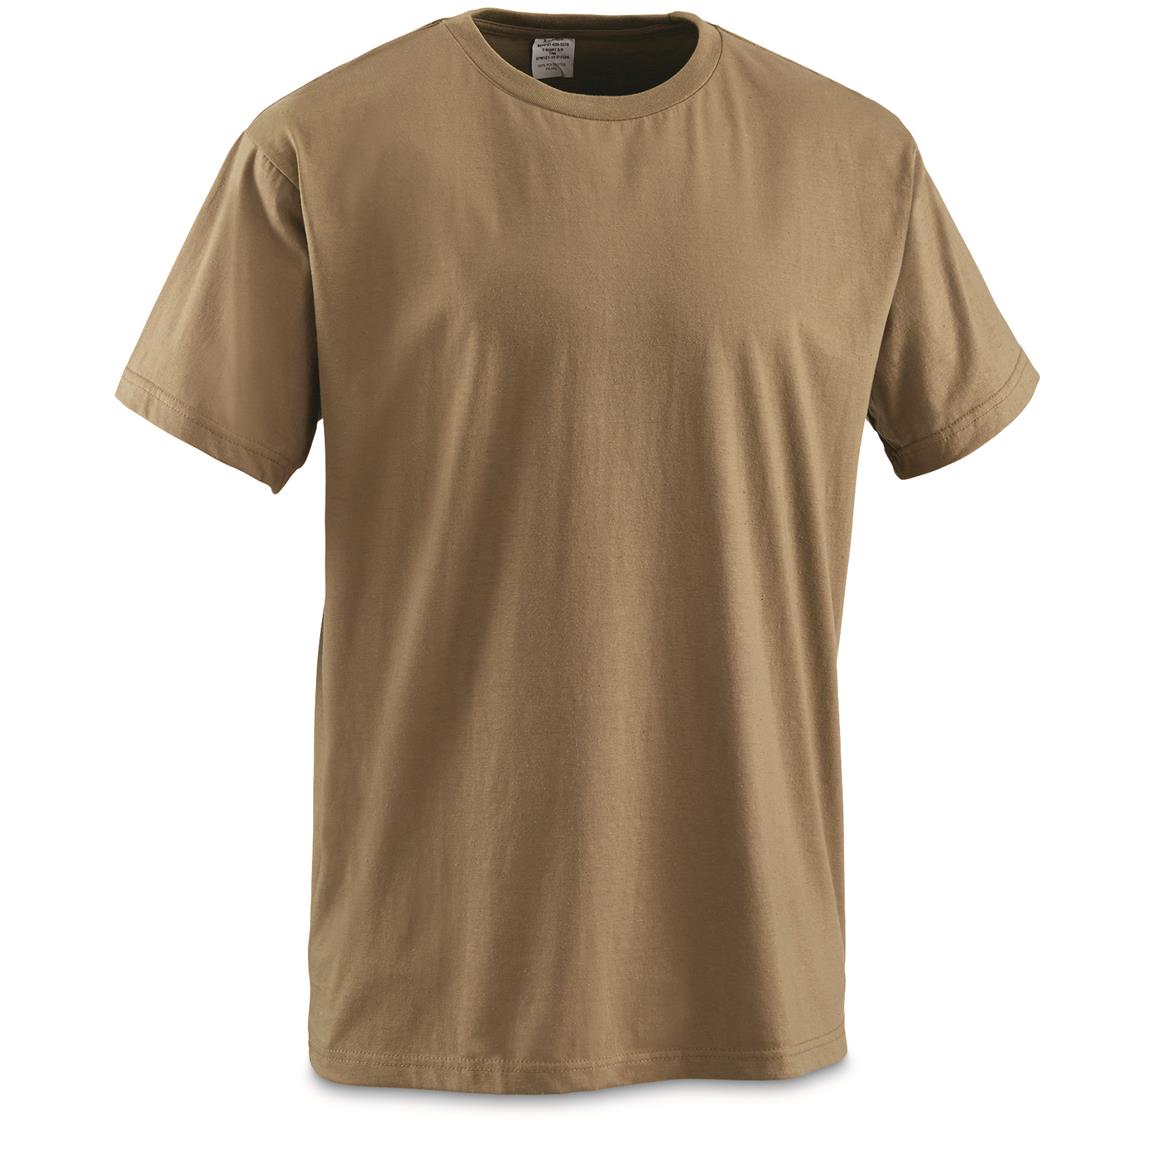 U.S. Military Surplus OCP Coyote T-Shirt, 6 Pack, New